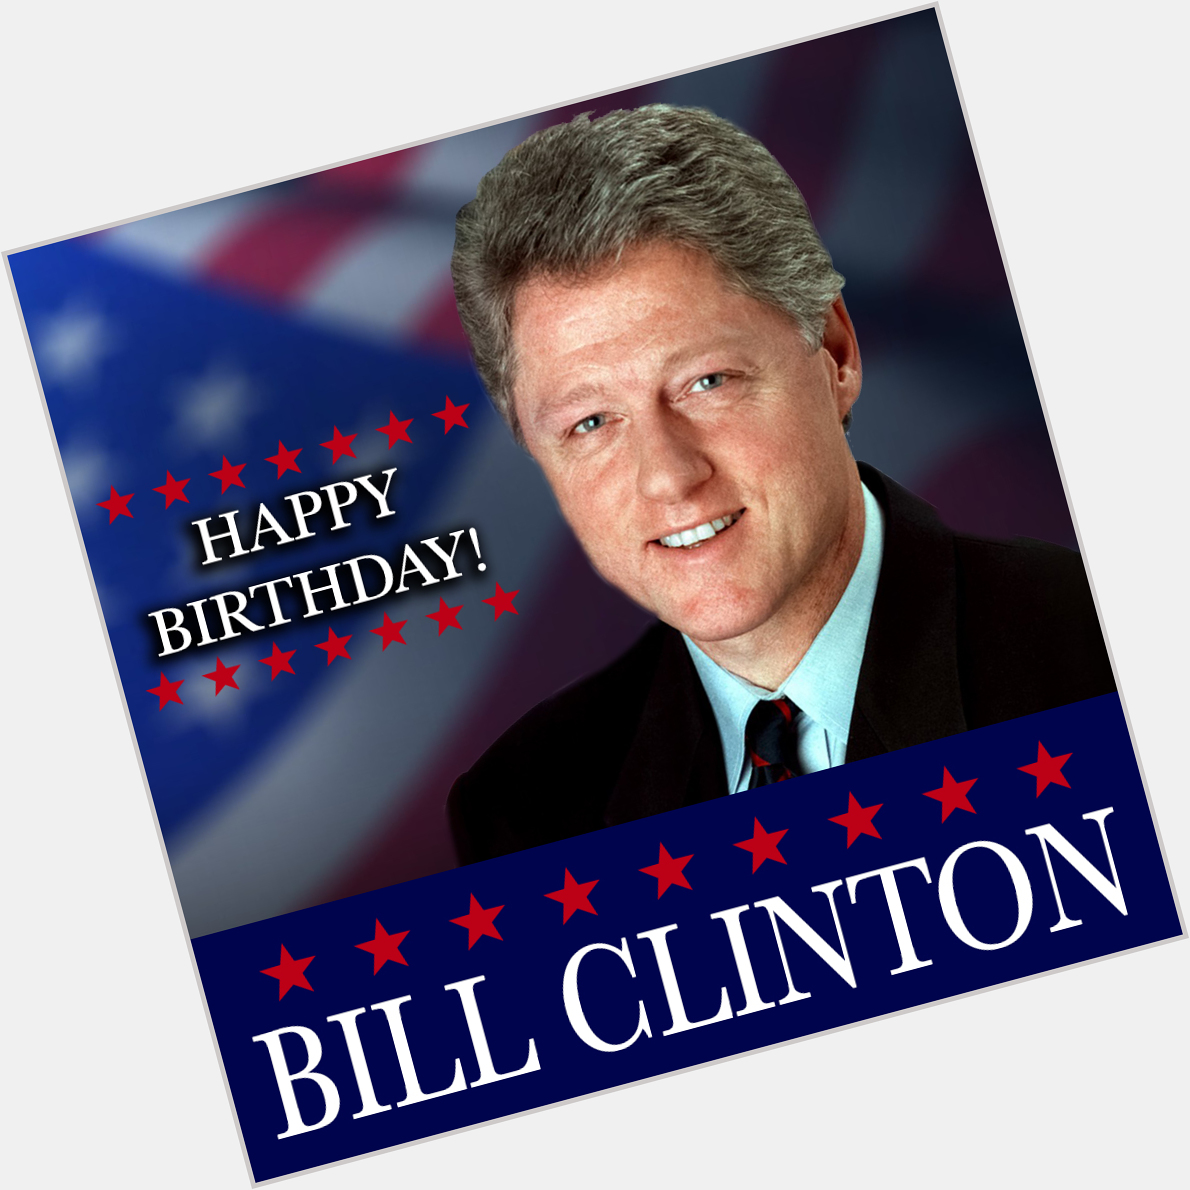 HAPPY BIRTHDAY! Former President Bill Clinton turns 74 today. 